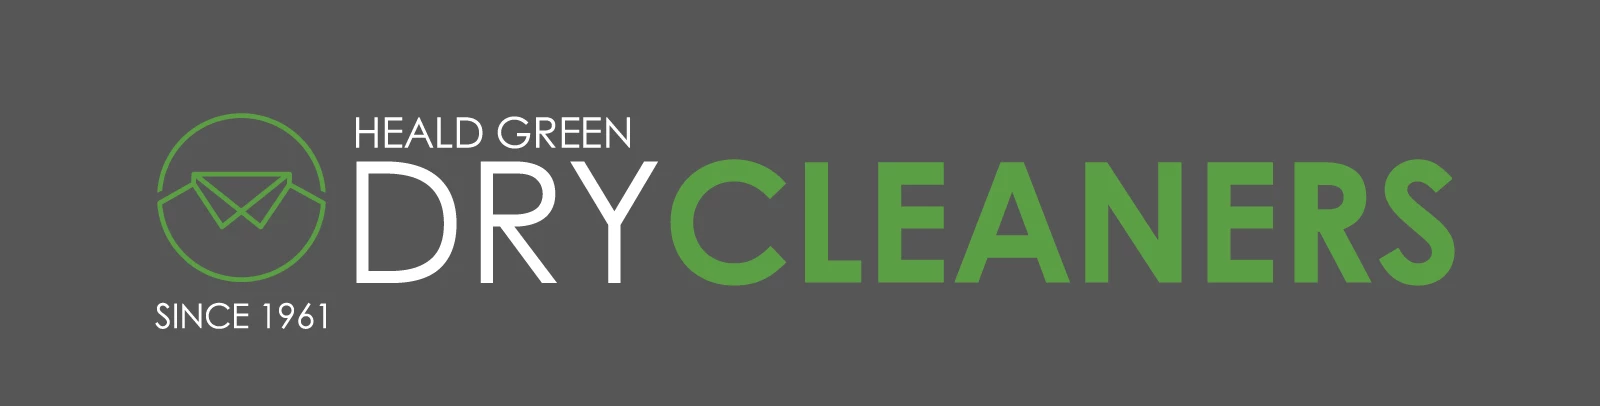 Heald Green Dry Cleaners Logo